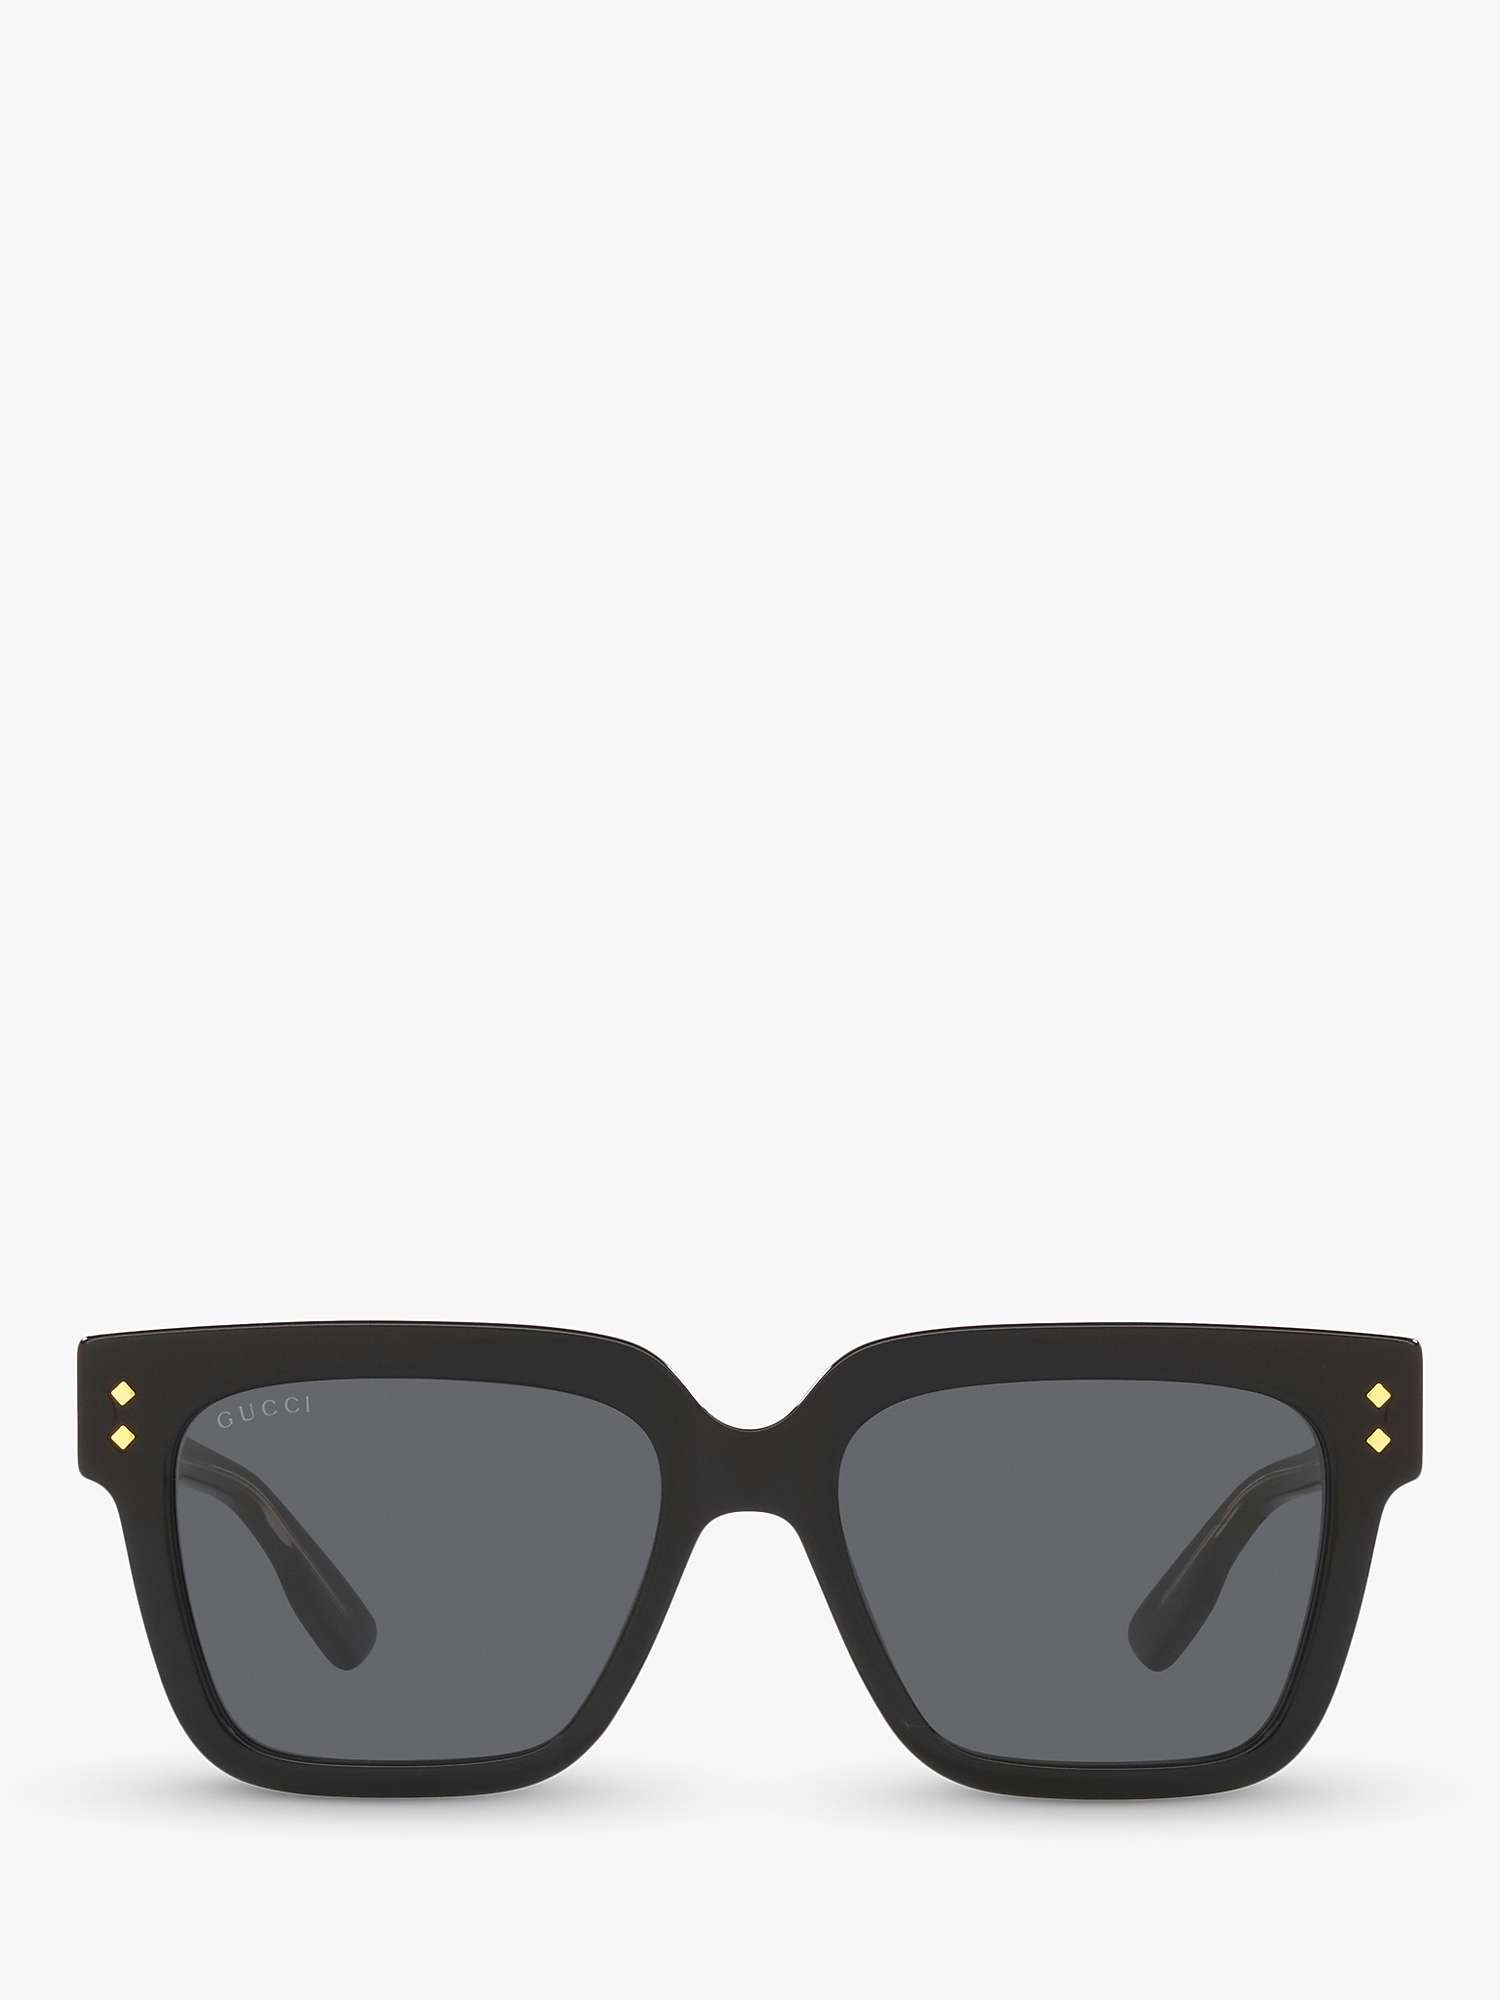 Buy Gucci GG1084S Unisex Rectangular Sunglasses Online at johnlewis.com